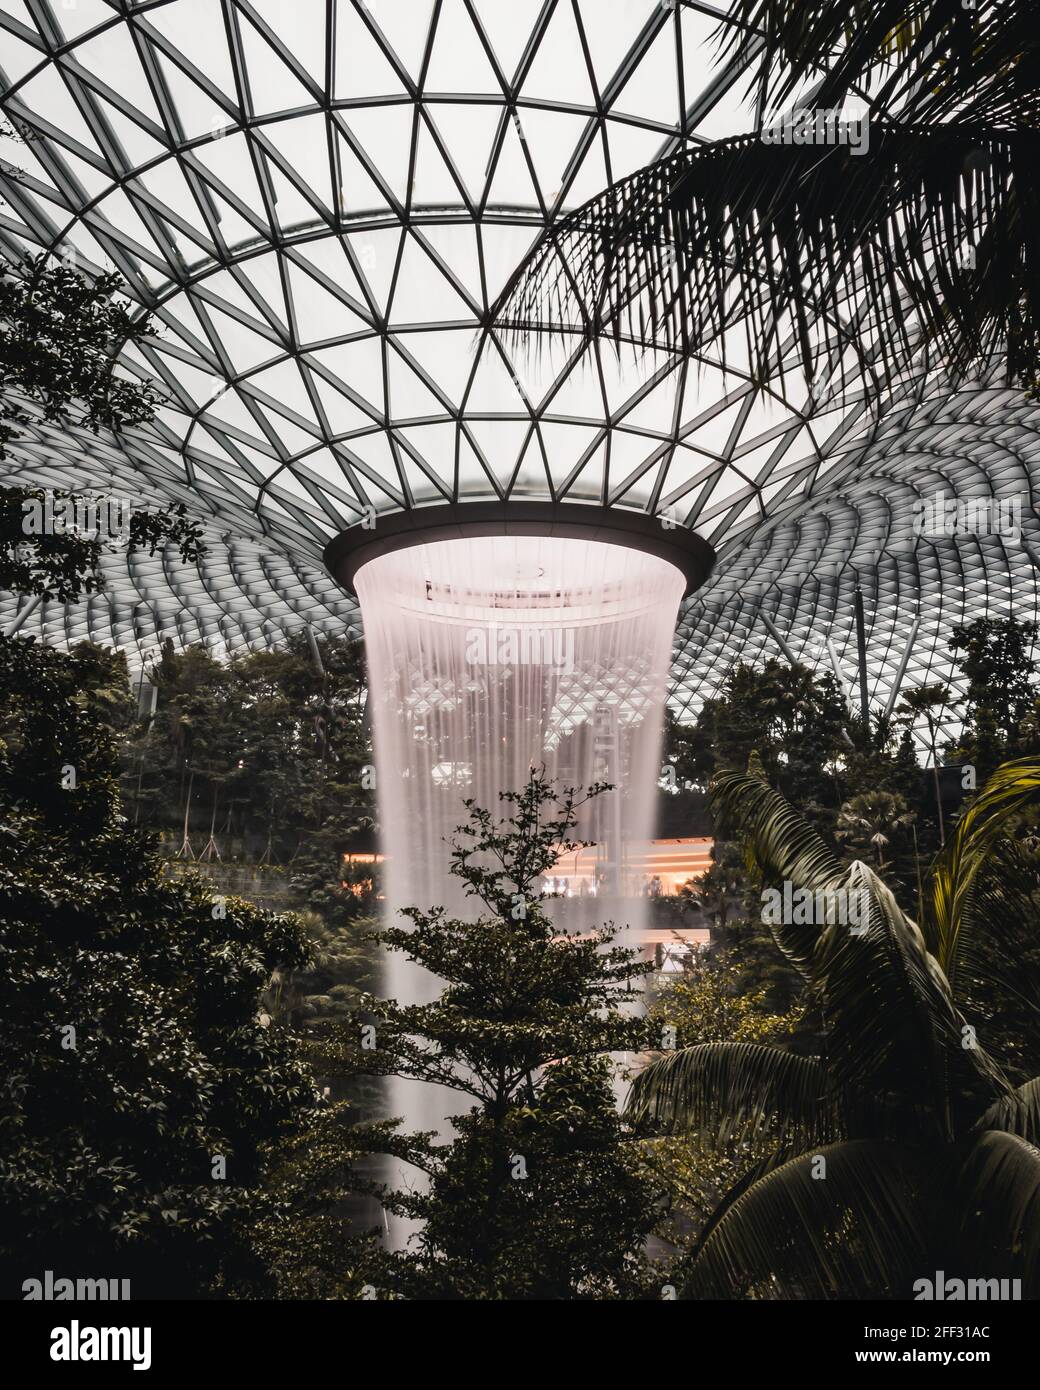 Singapore Changi Airport Jewel Indoor Rainforest